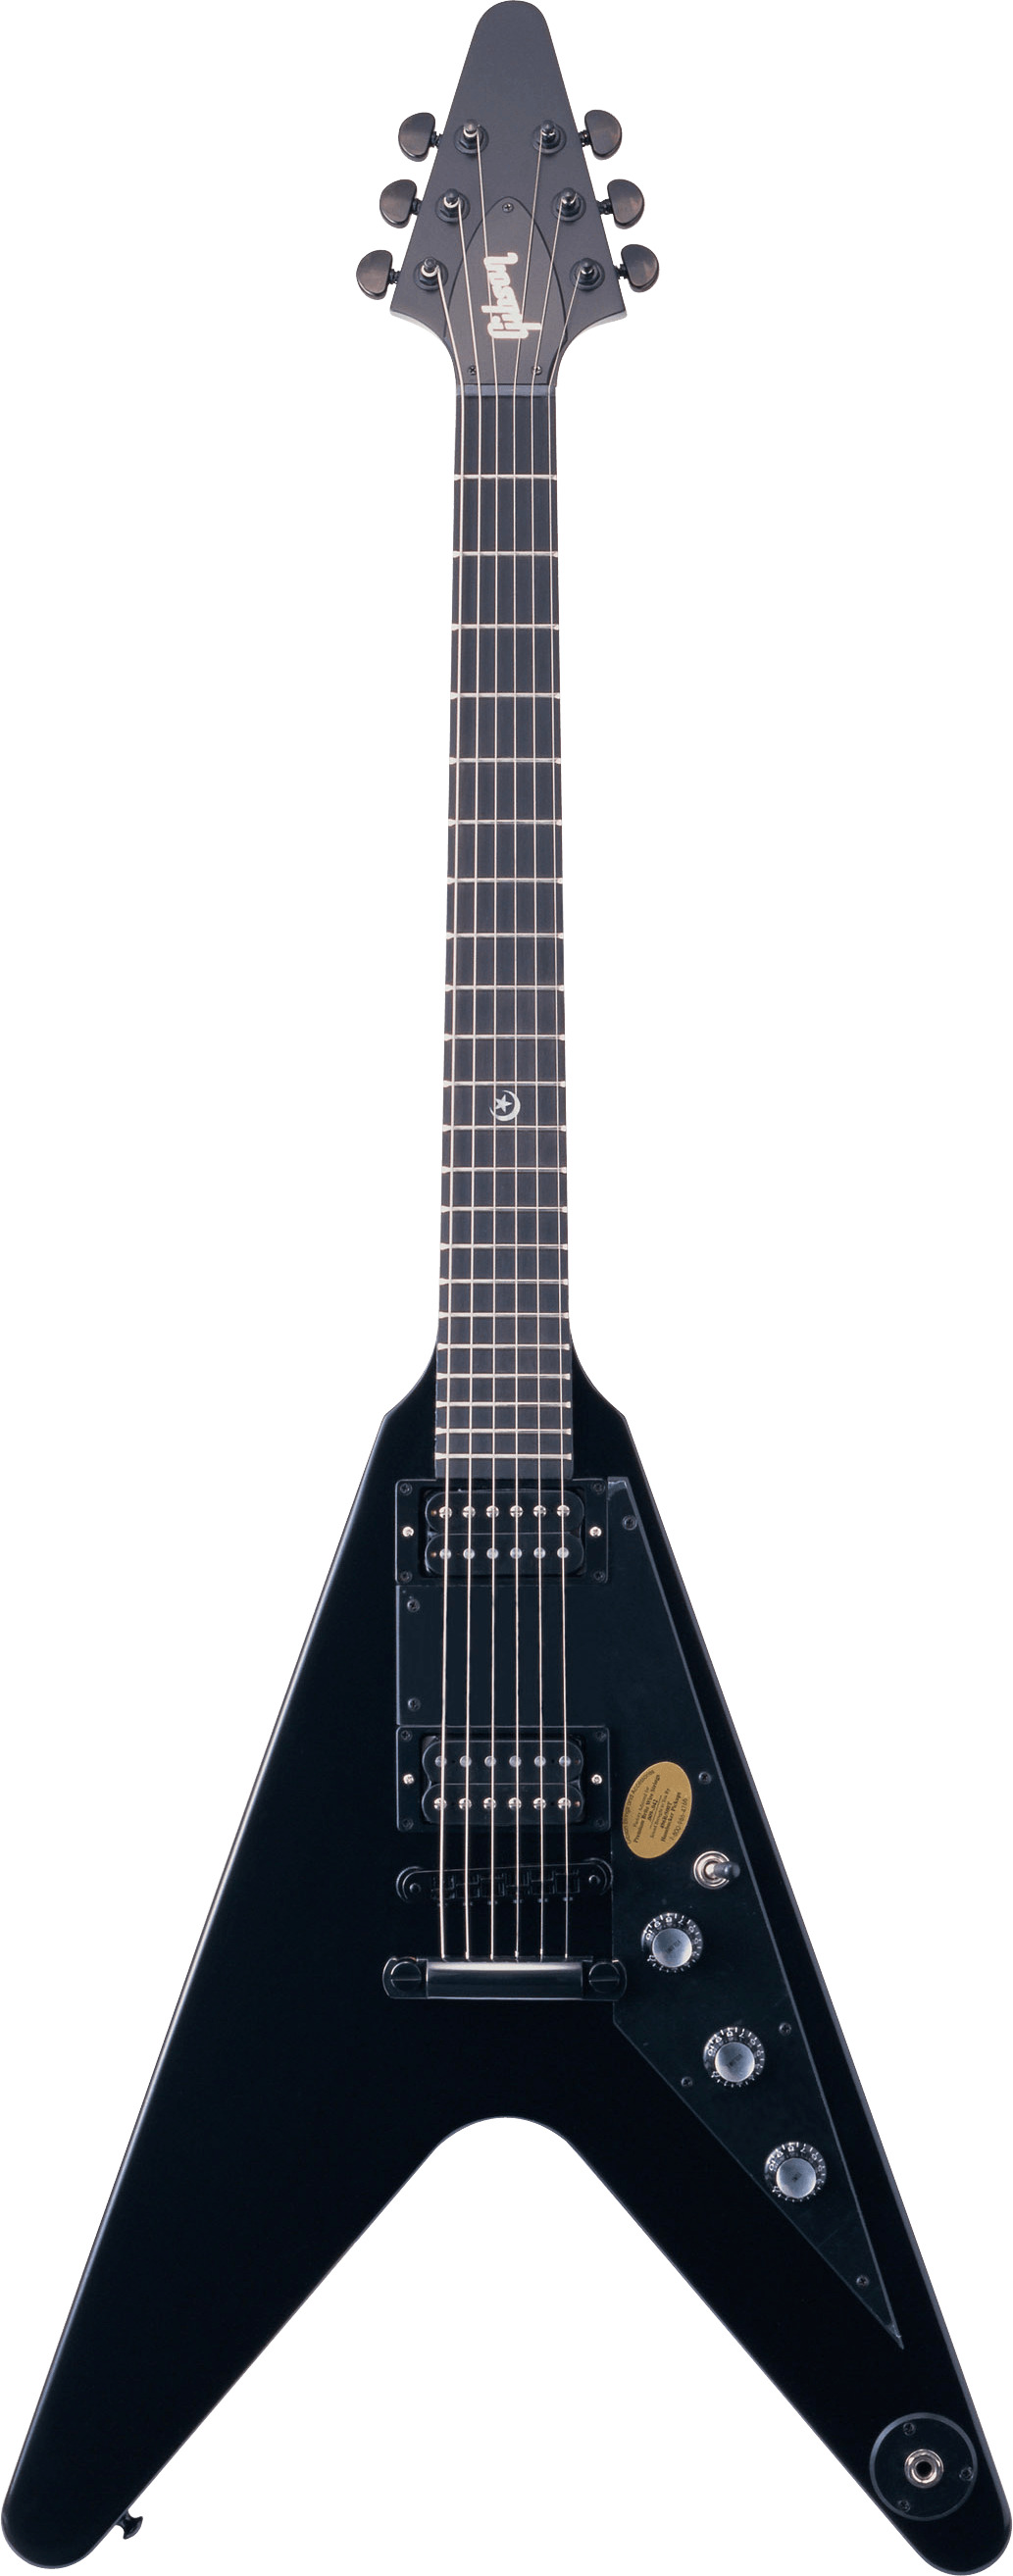 Gibson Metal Rock Guitar png icons